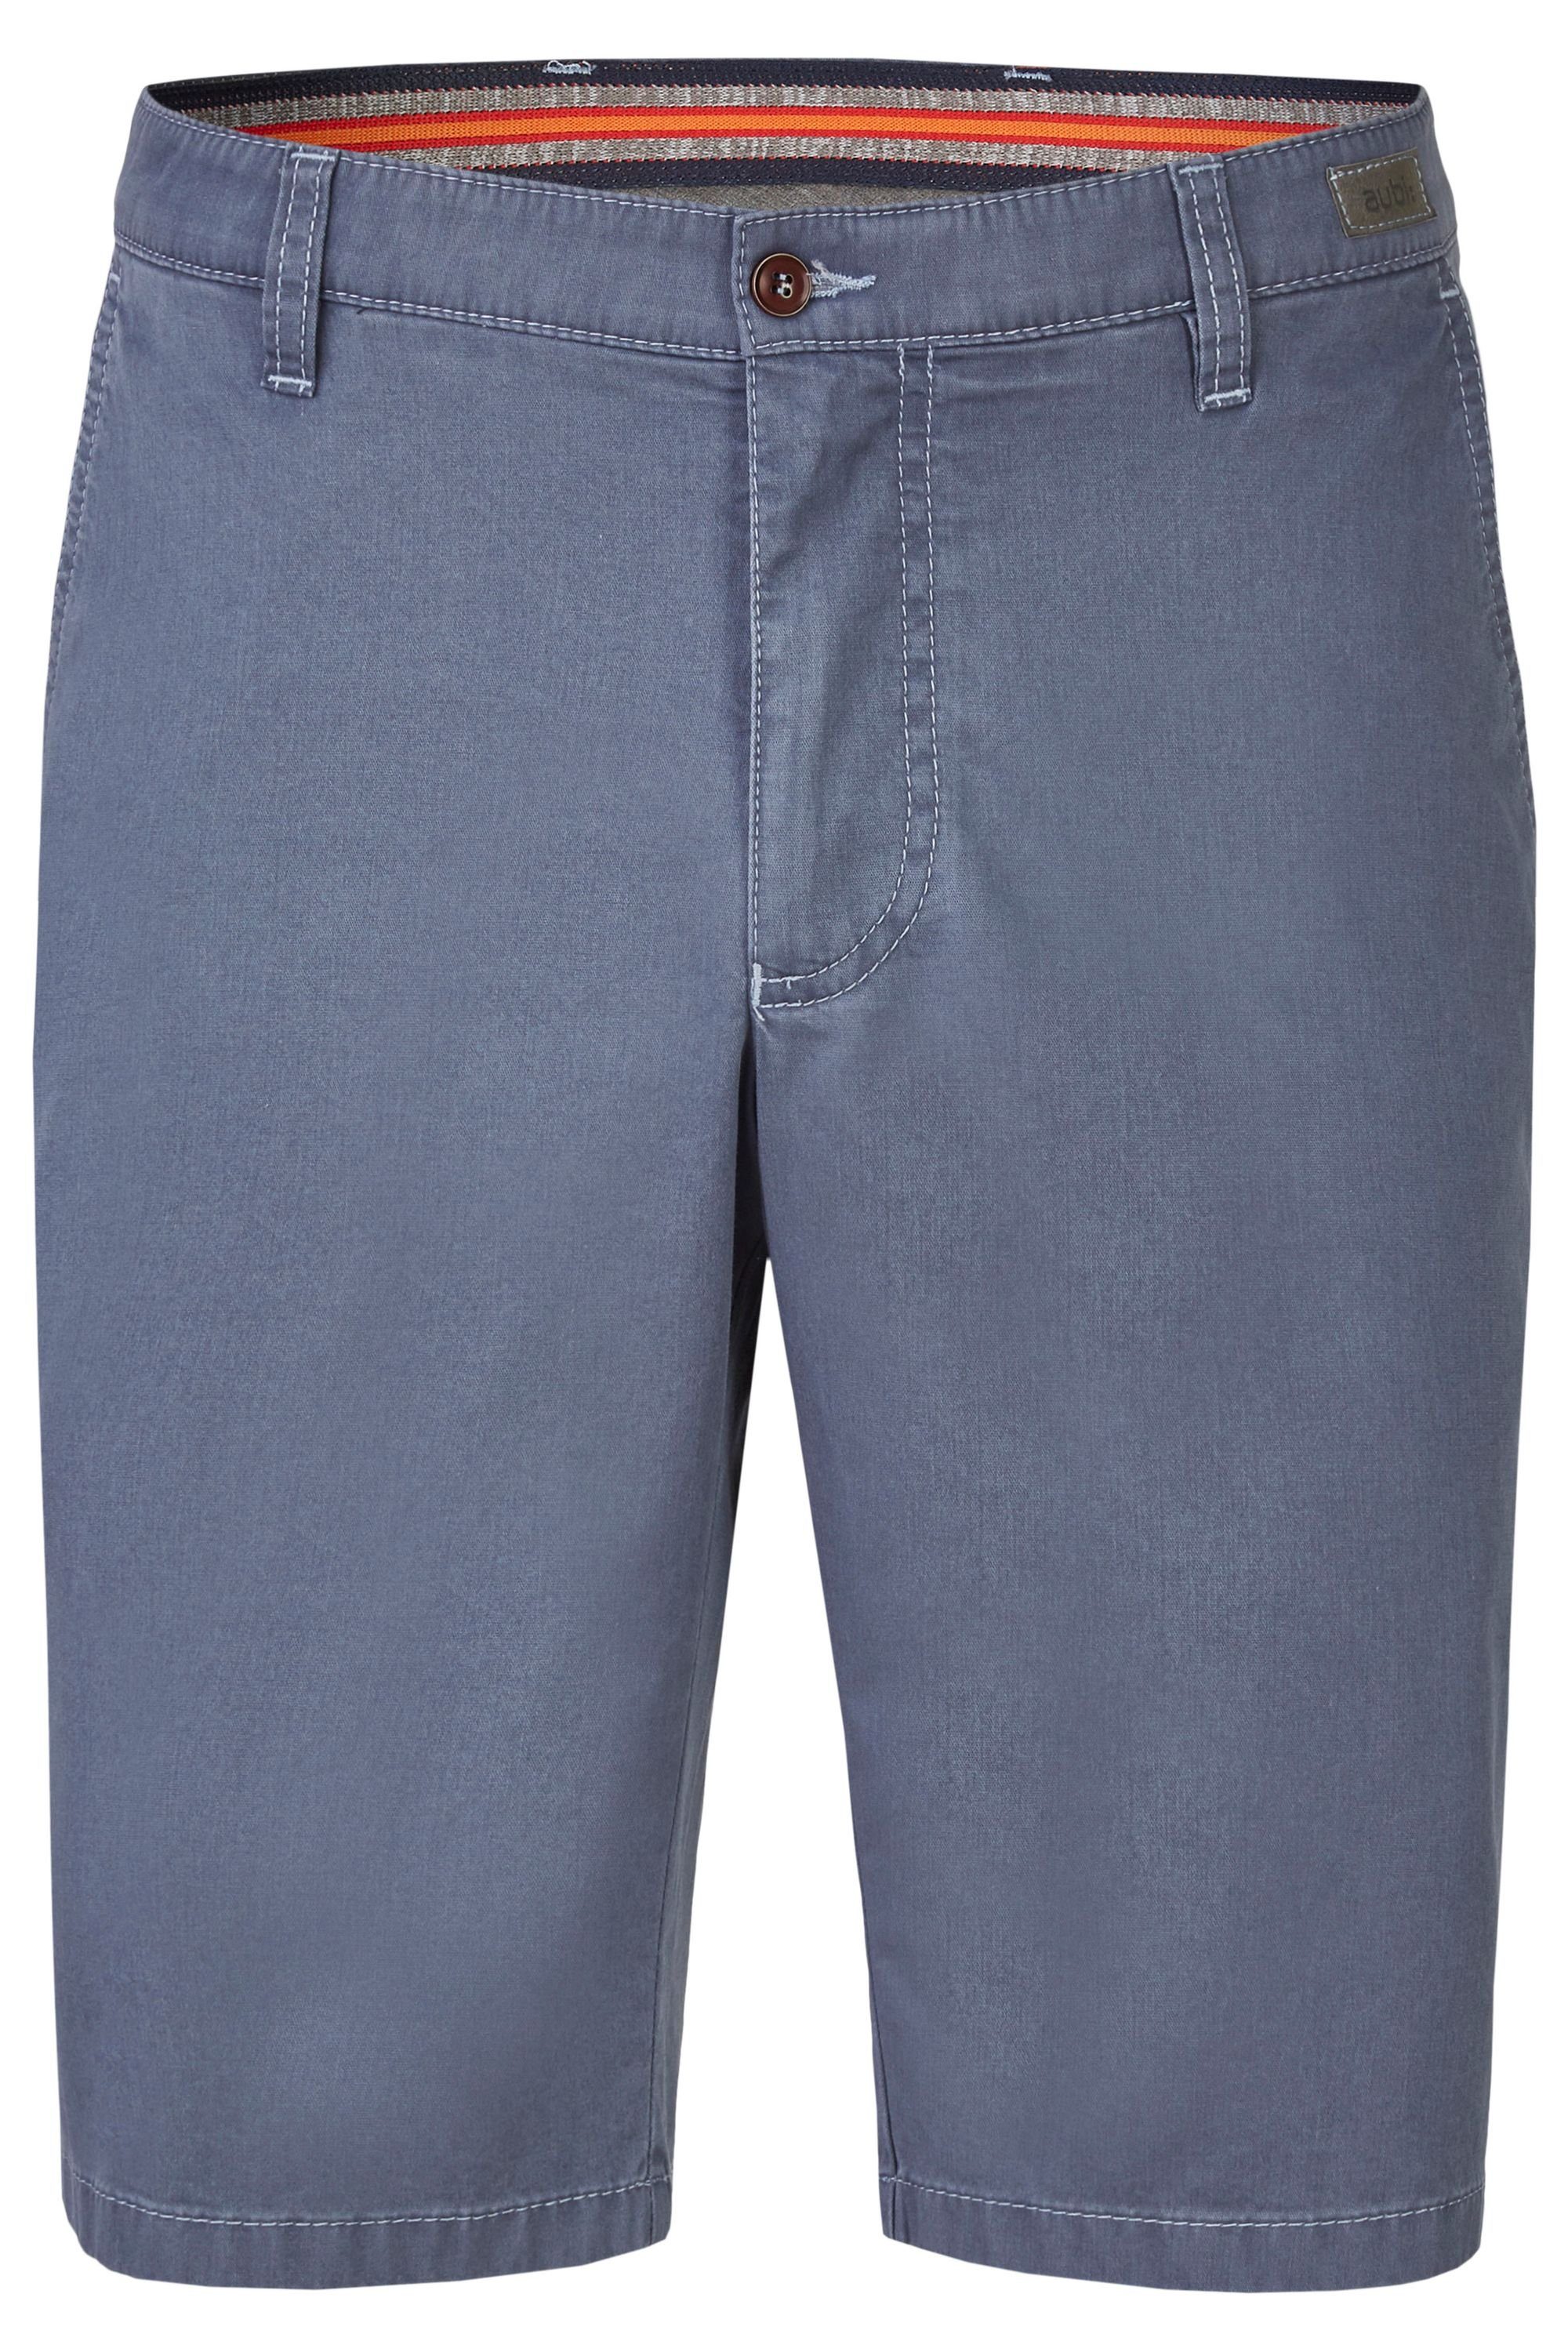 aubi: Stoffhose aubi Modern Fit Herren Shorts Paisley High Flex Modell 688 blau (44)